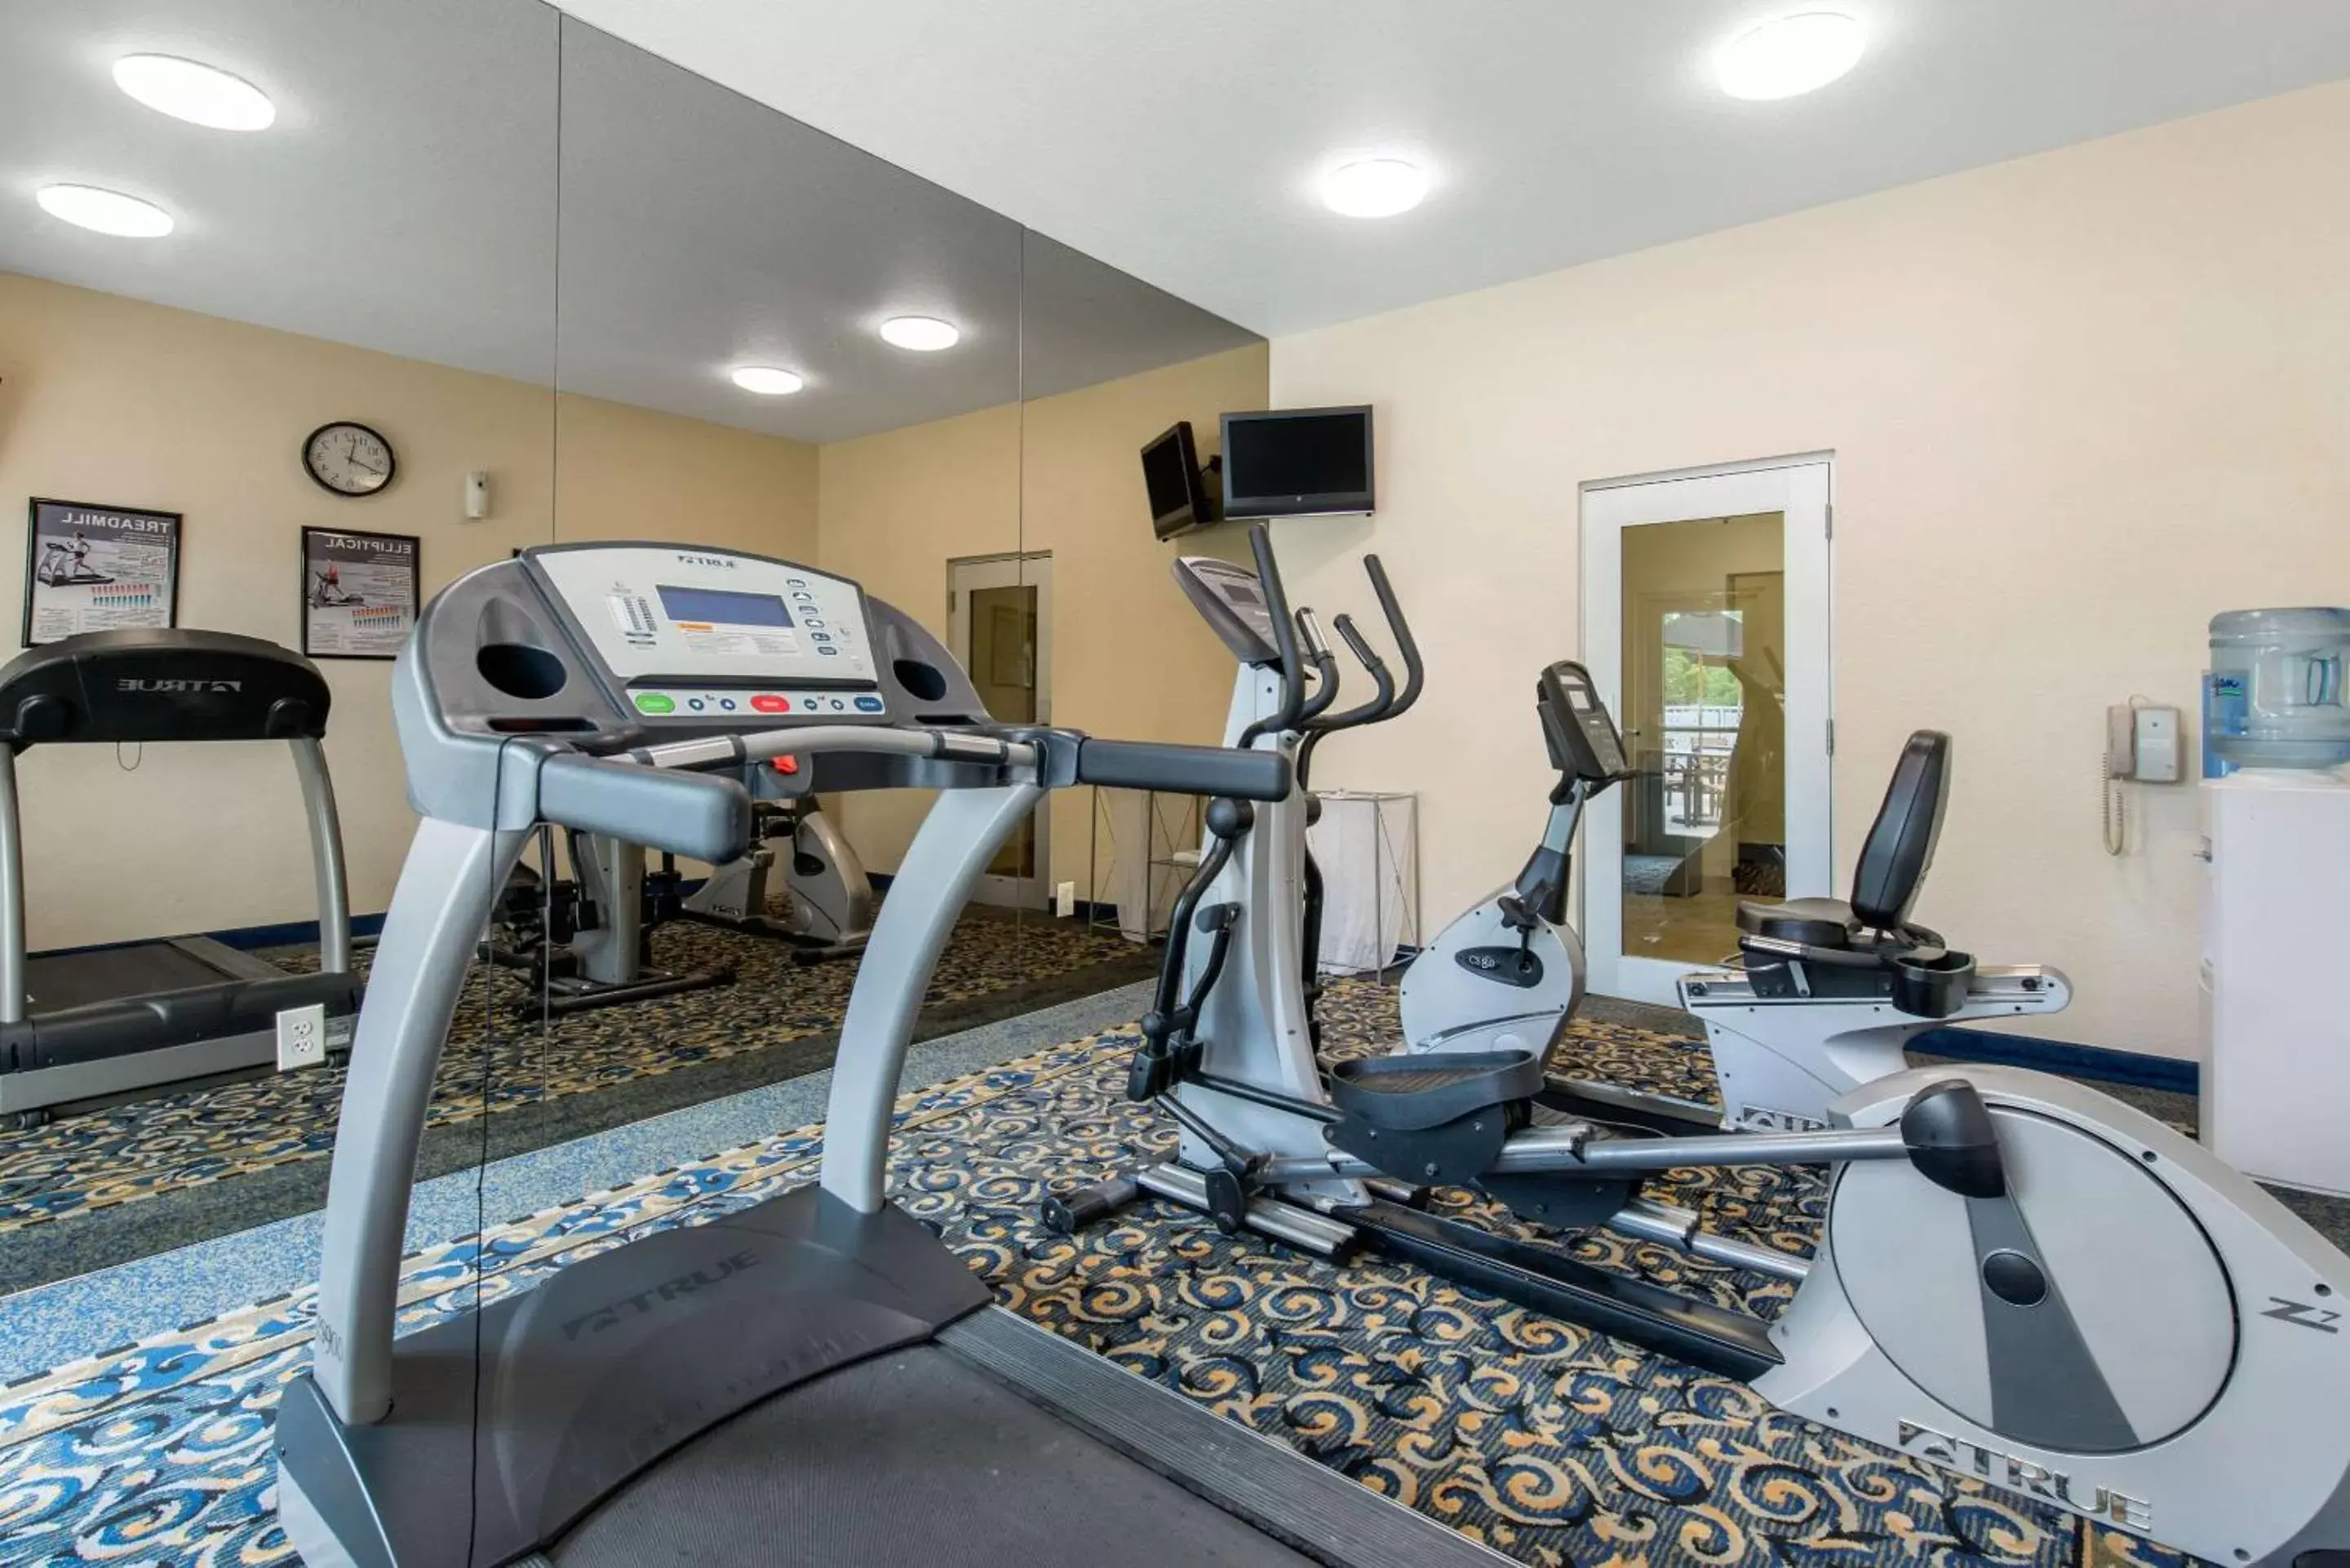 Fitness centre/facilities, Fitness Center/Facilities in Sleep Inn & Suites Port Charlotte-Punta Gorda